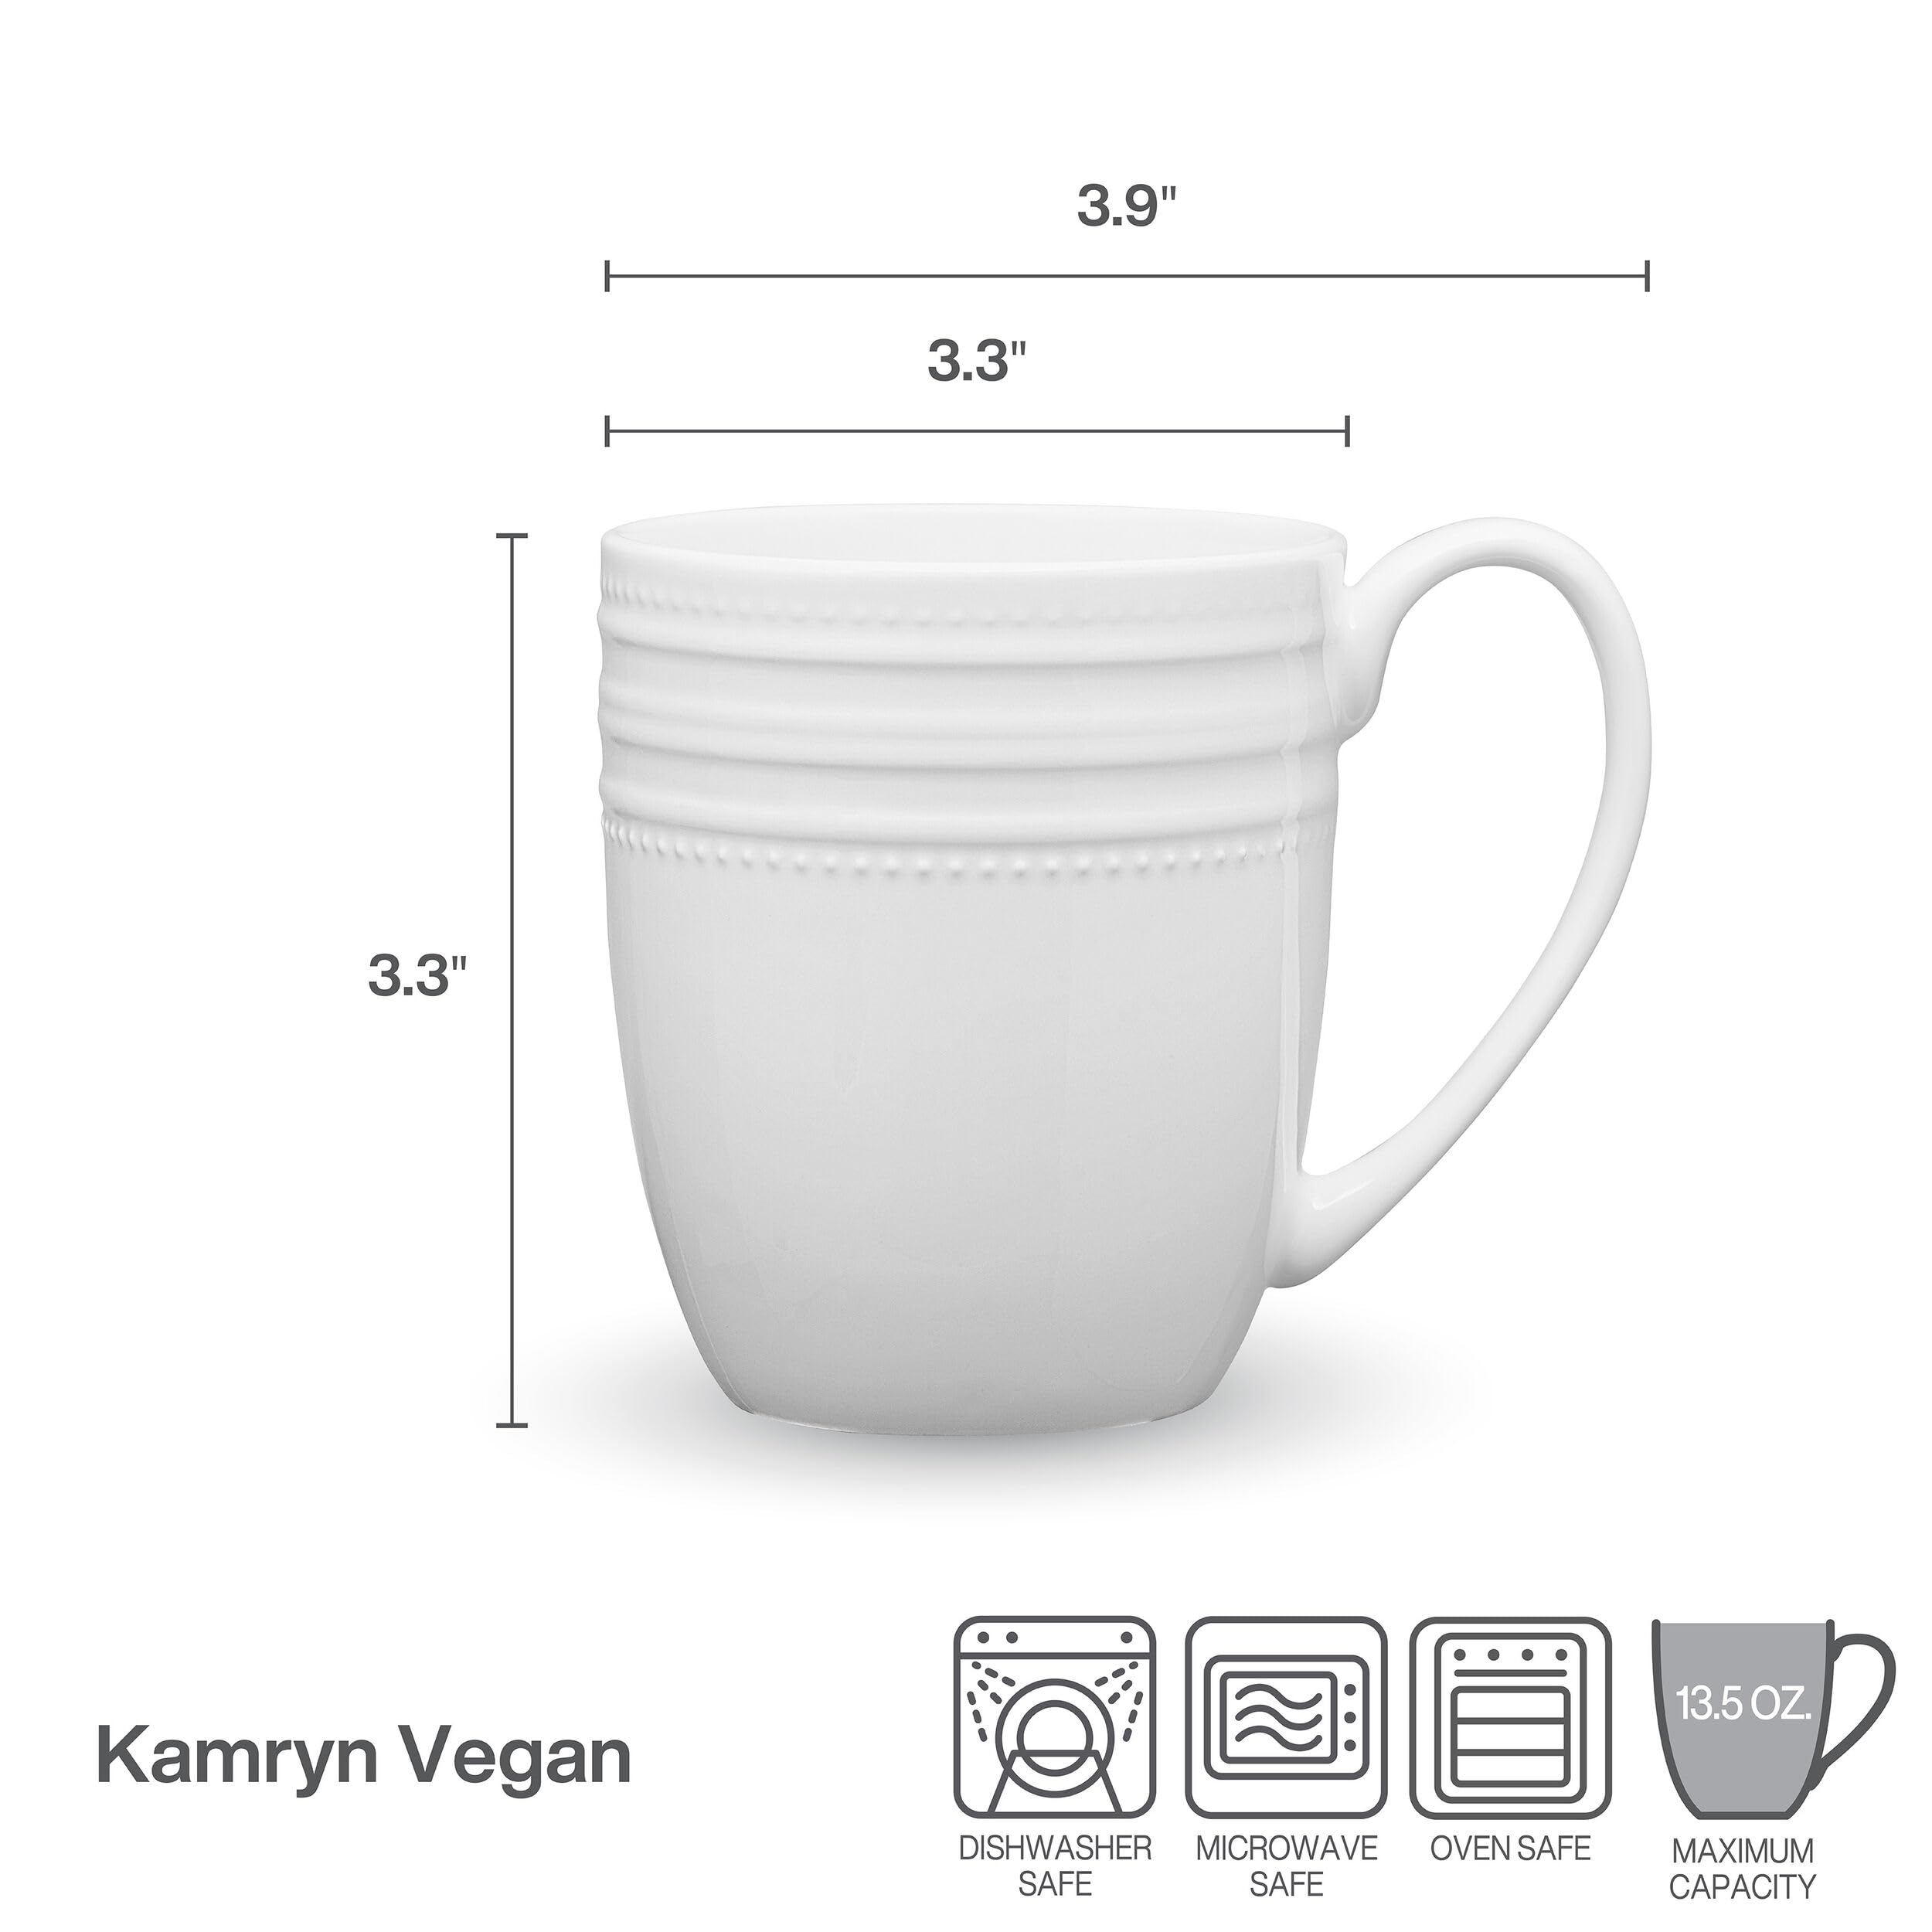 Mikasa Kamryn Vegan Bone China Lightweight Set of 4 Mugs, 13.5 Ounce, White